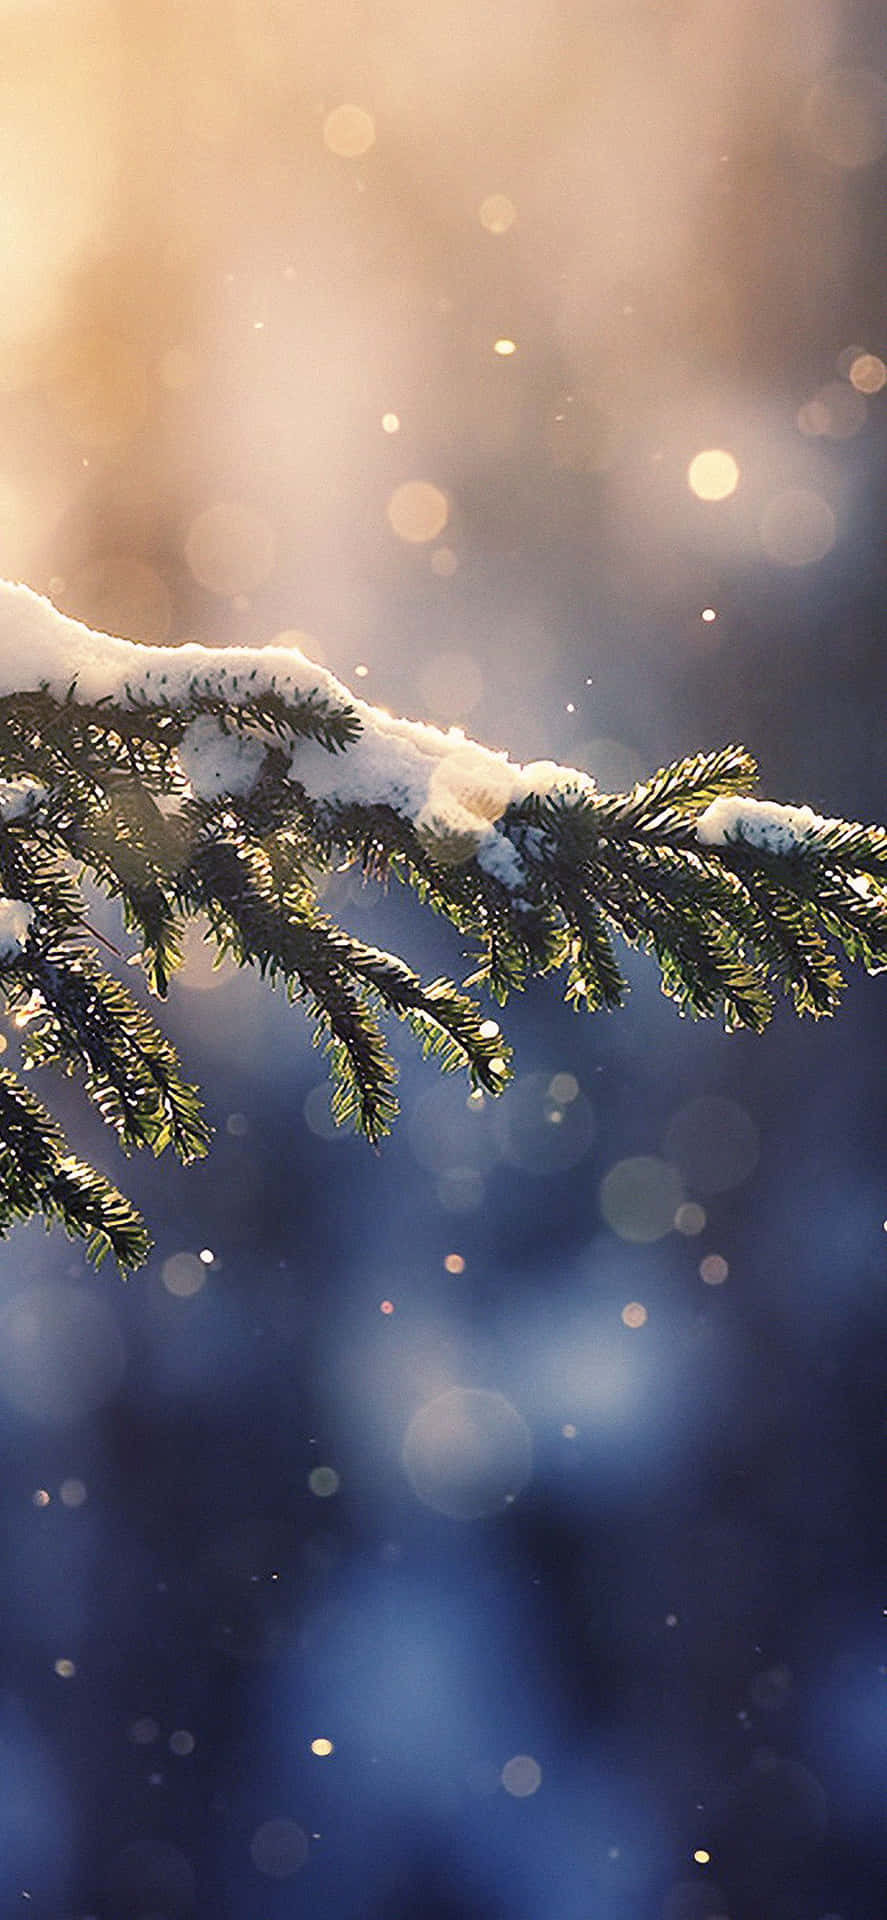 Caption: Enchanting Christmas Winter Wonderland